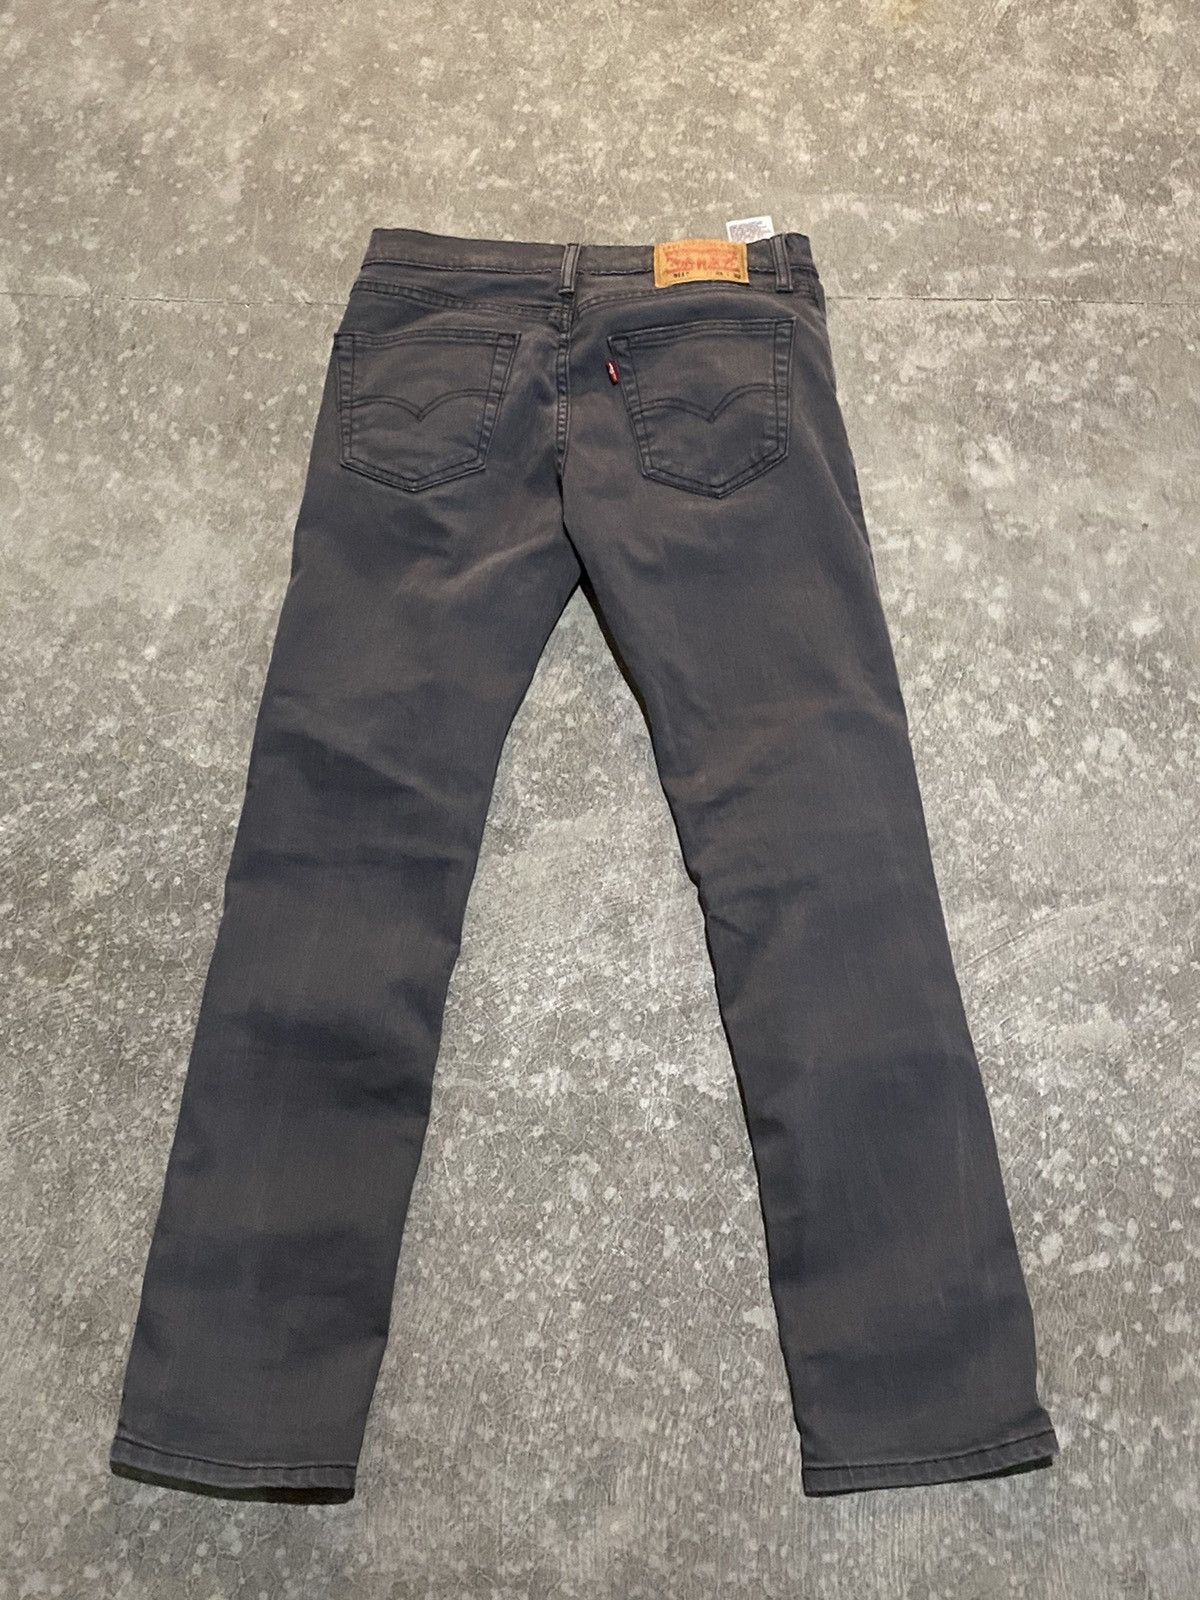 Vintage Grey Levi 511 Jeans 31x32 Size US 31 - 6 Thumbnail